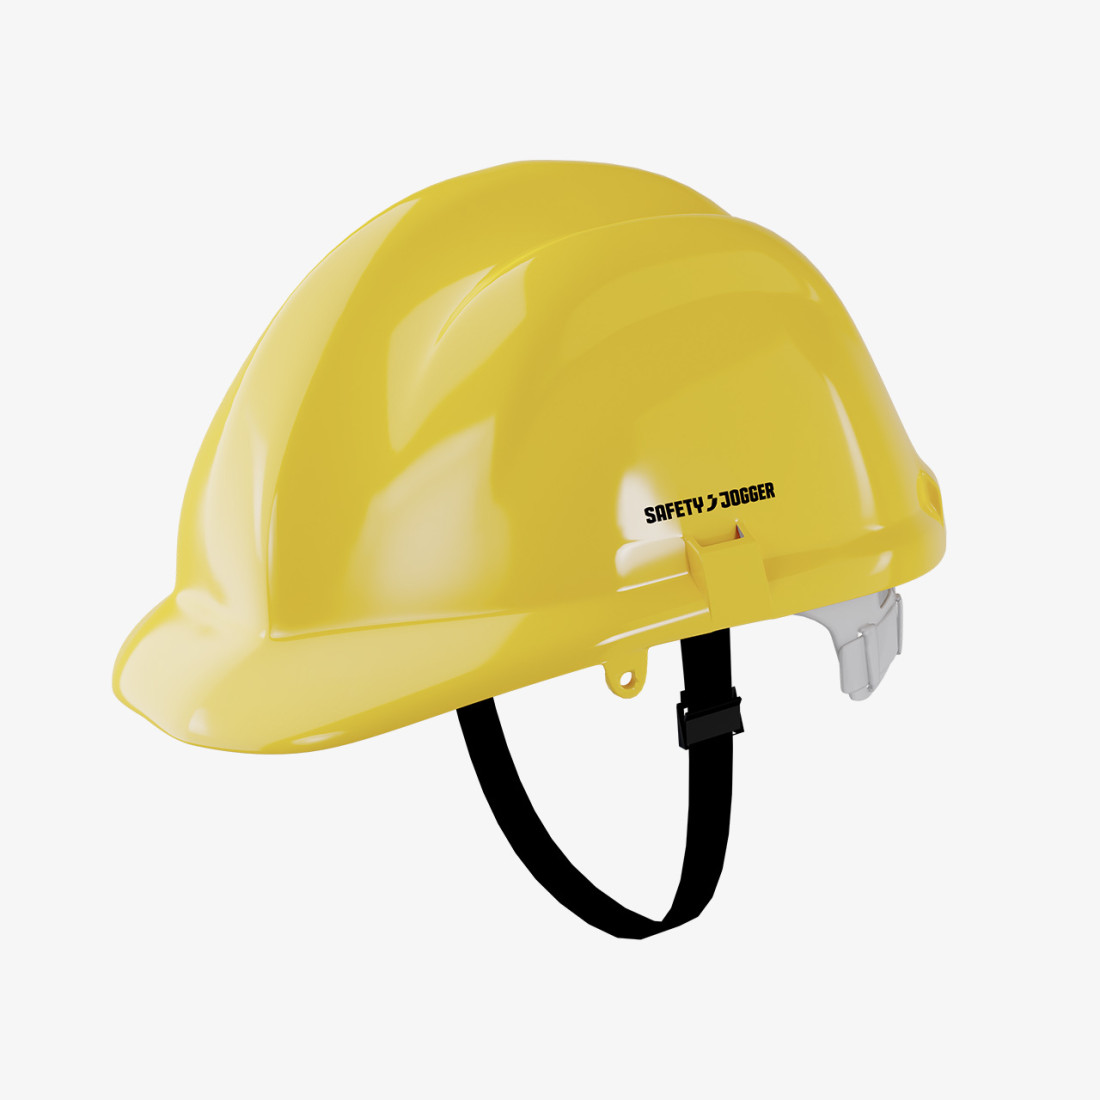 KANHASWS Versatile safety helmet - Personal protection